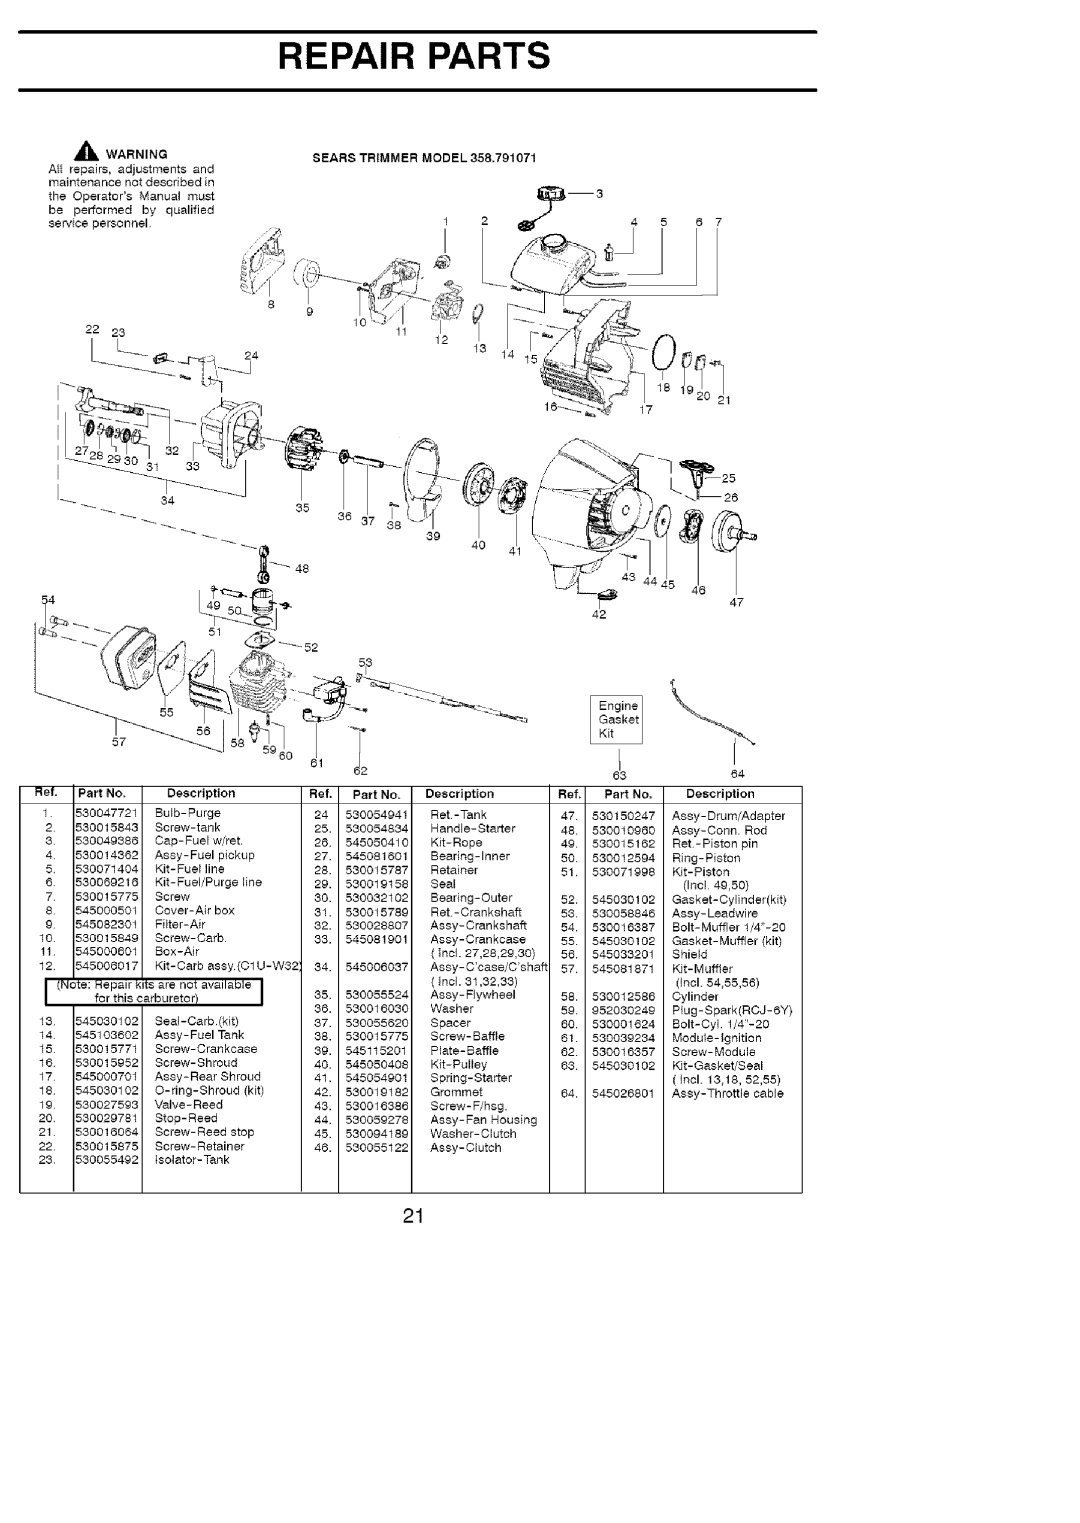 Craftsman 358.791071 Repair Parts, Sears Trimmer Model, 530015849, 530015771, 550016064, 550015875, isolator-Tank 